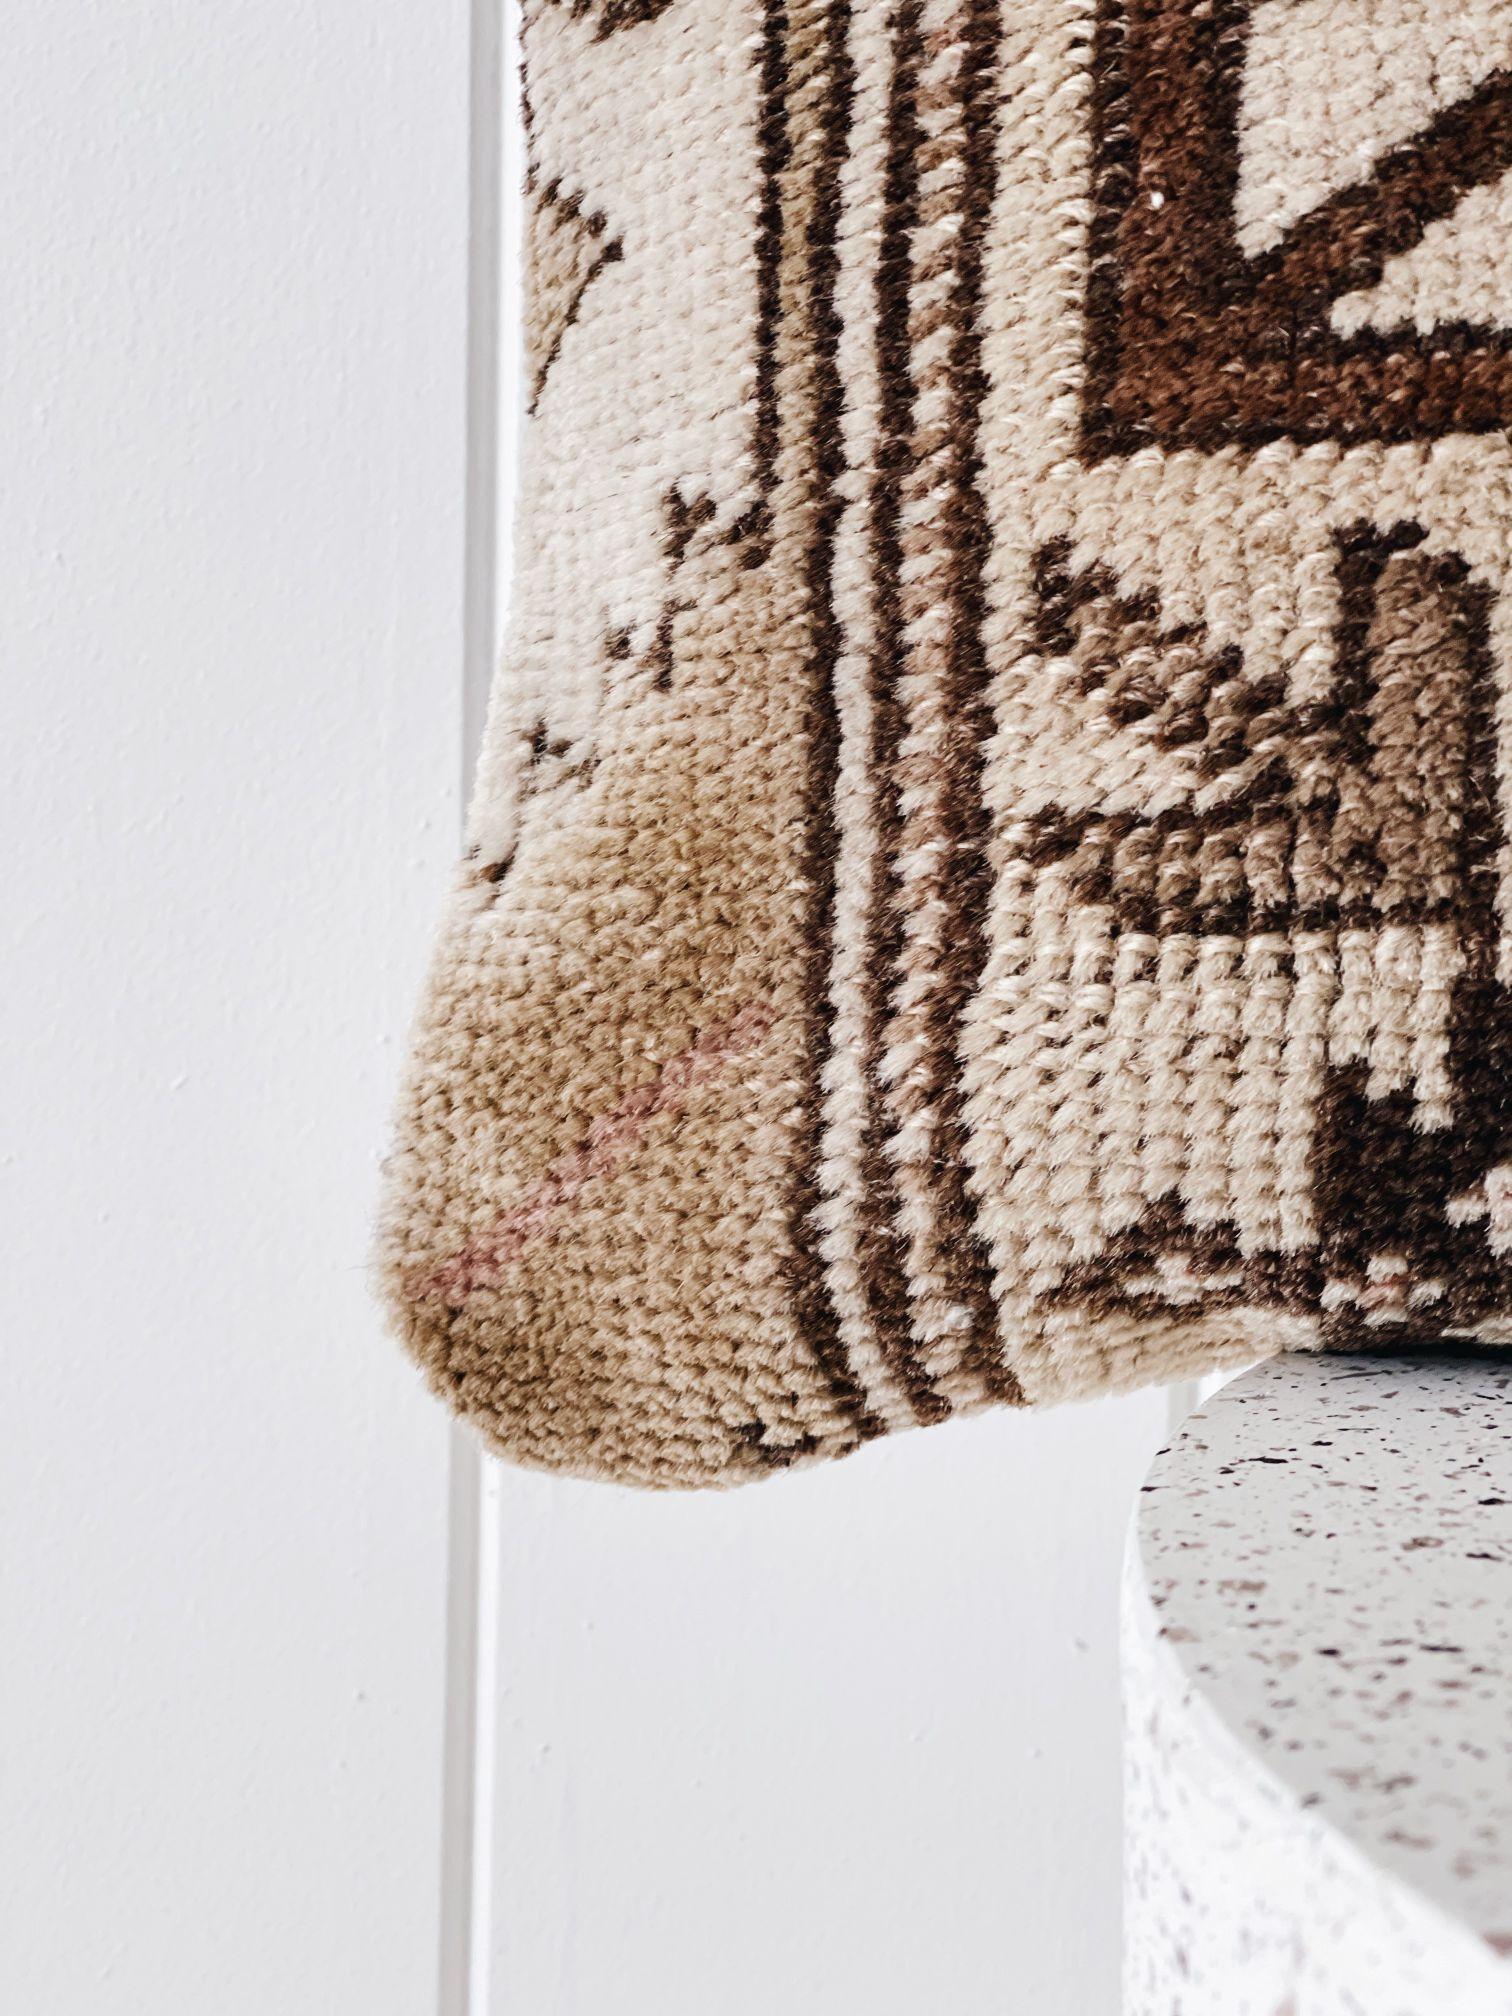 Aria One of A Kind Handmade Boho Kilim Lumbar Cushion Cover - Lustere Living